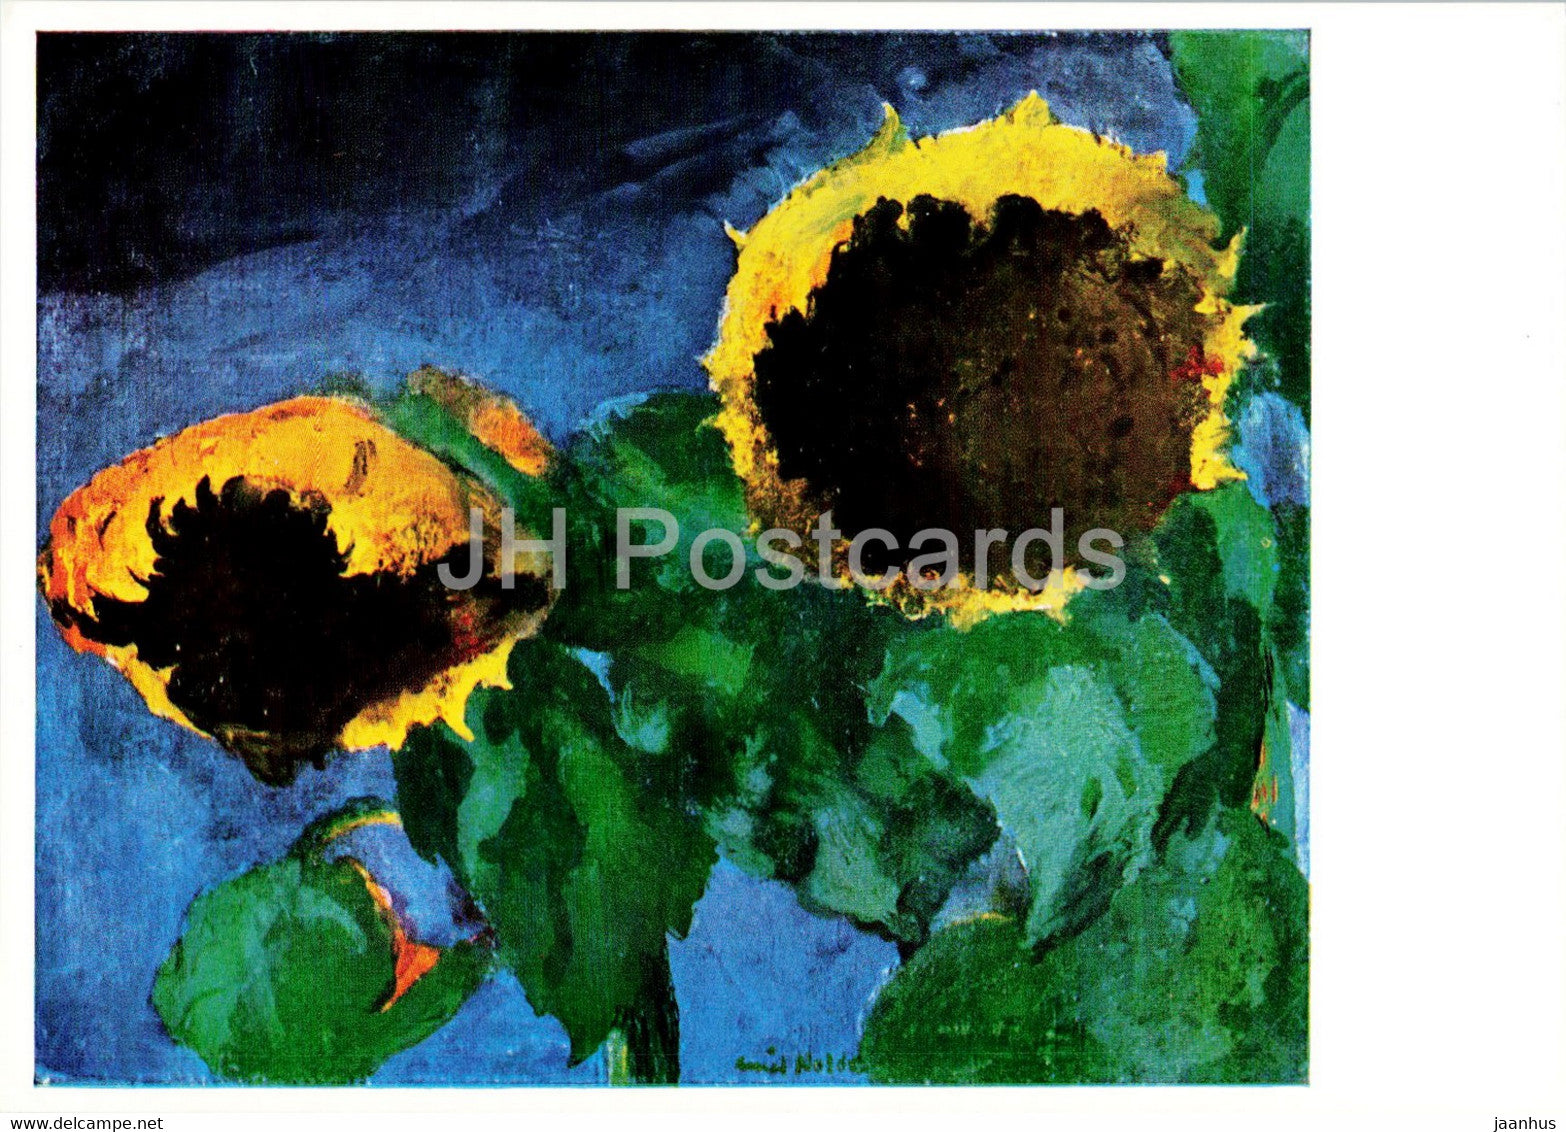 painting by Emil Nolde - Reife Sonnenblumen - Ripe sunflowers - German art - Germany - unused - JH Postcards